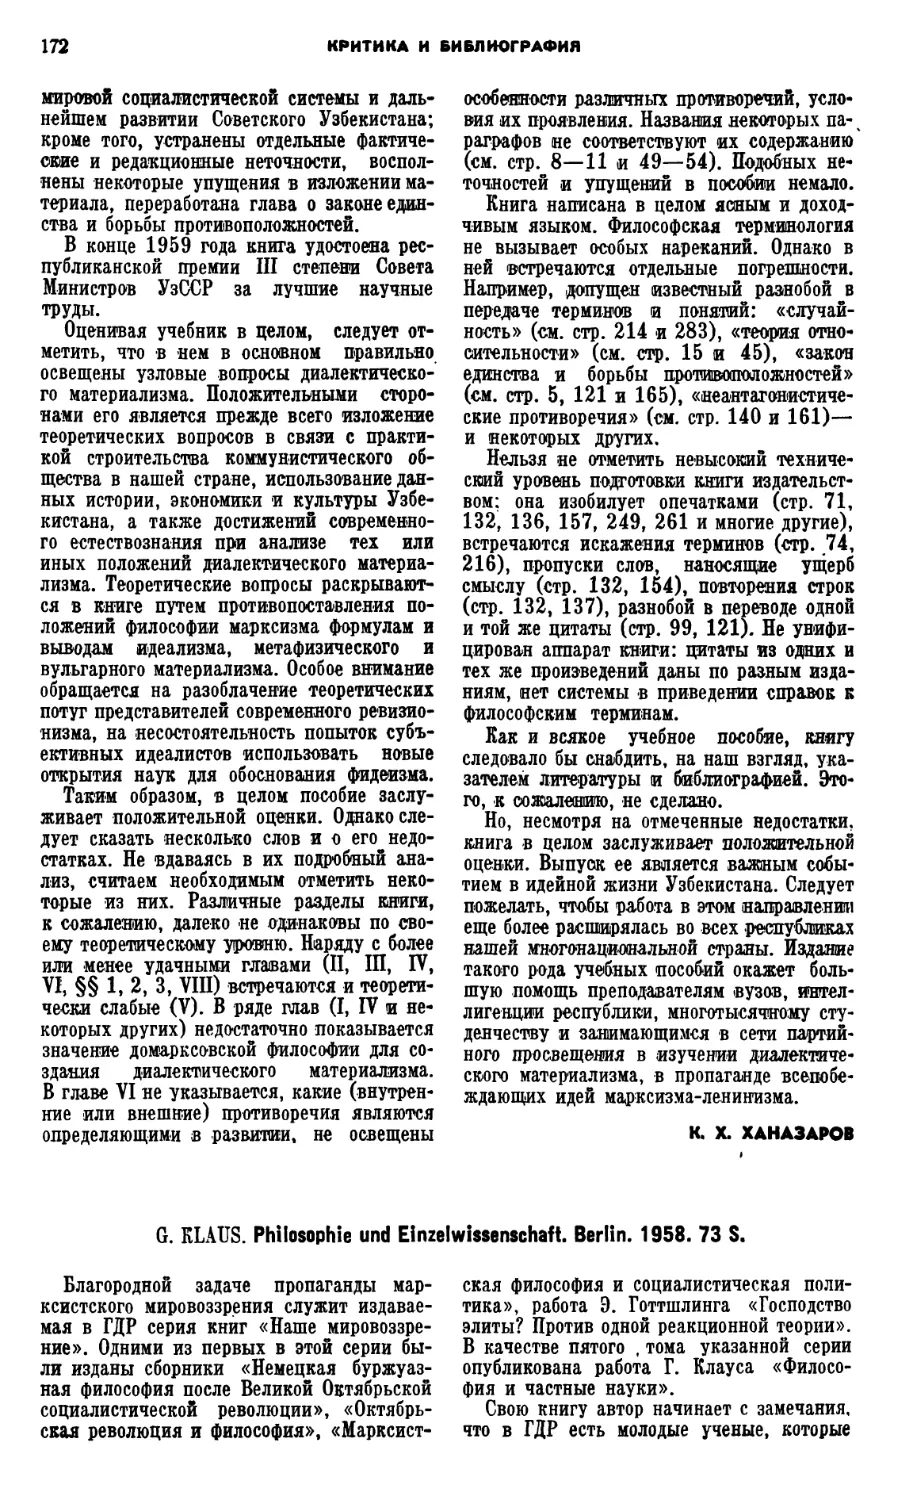 Л.С. Колесникова – G. Klaus. Philosophie und Einzelwissenschaft. 1958. S. 73